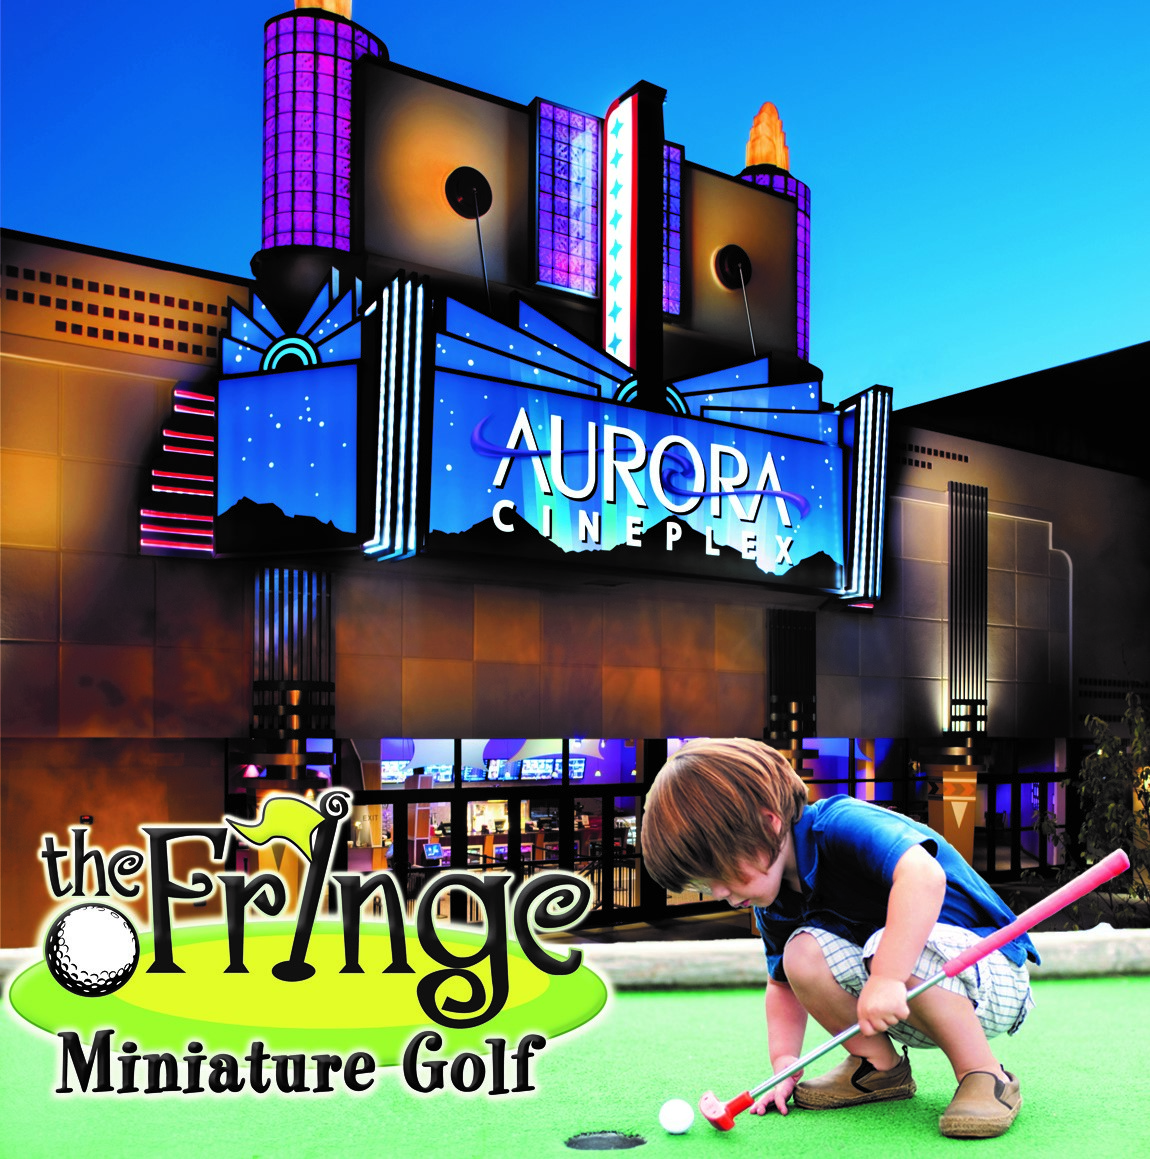 Area 51: Aurora Cineplex and The Fringe Miniature Golf